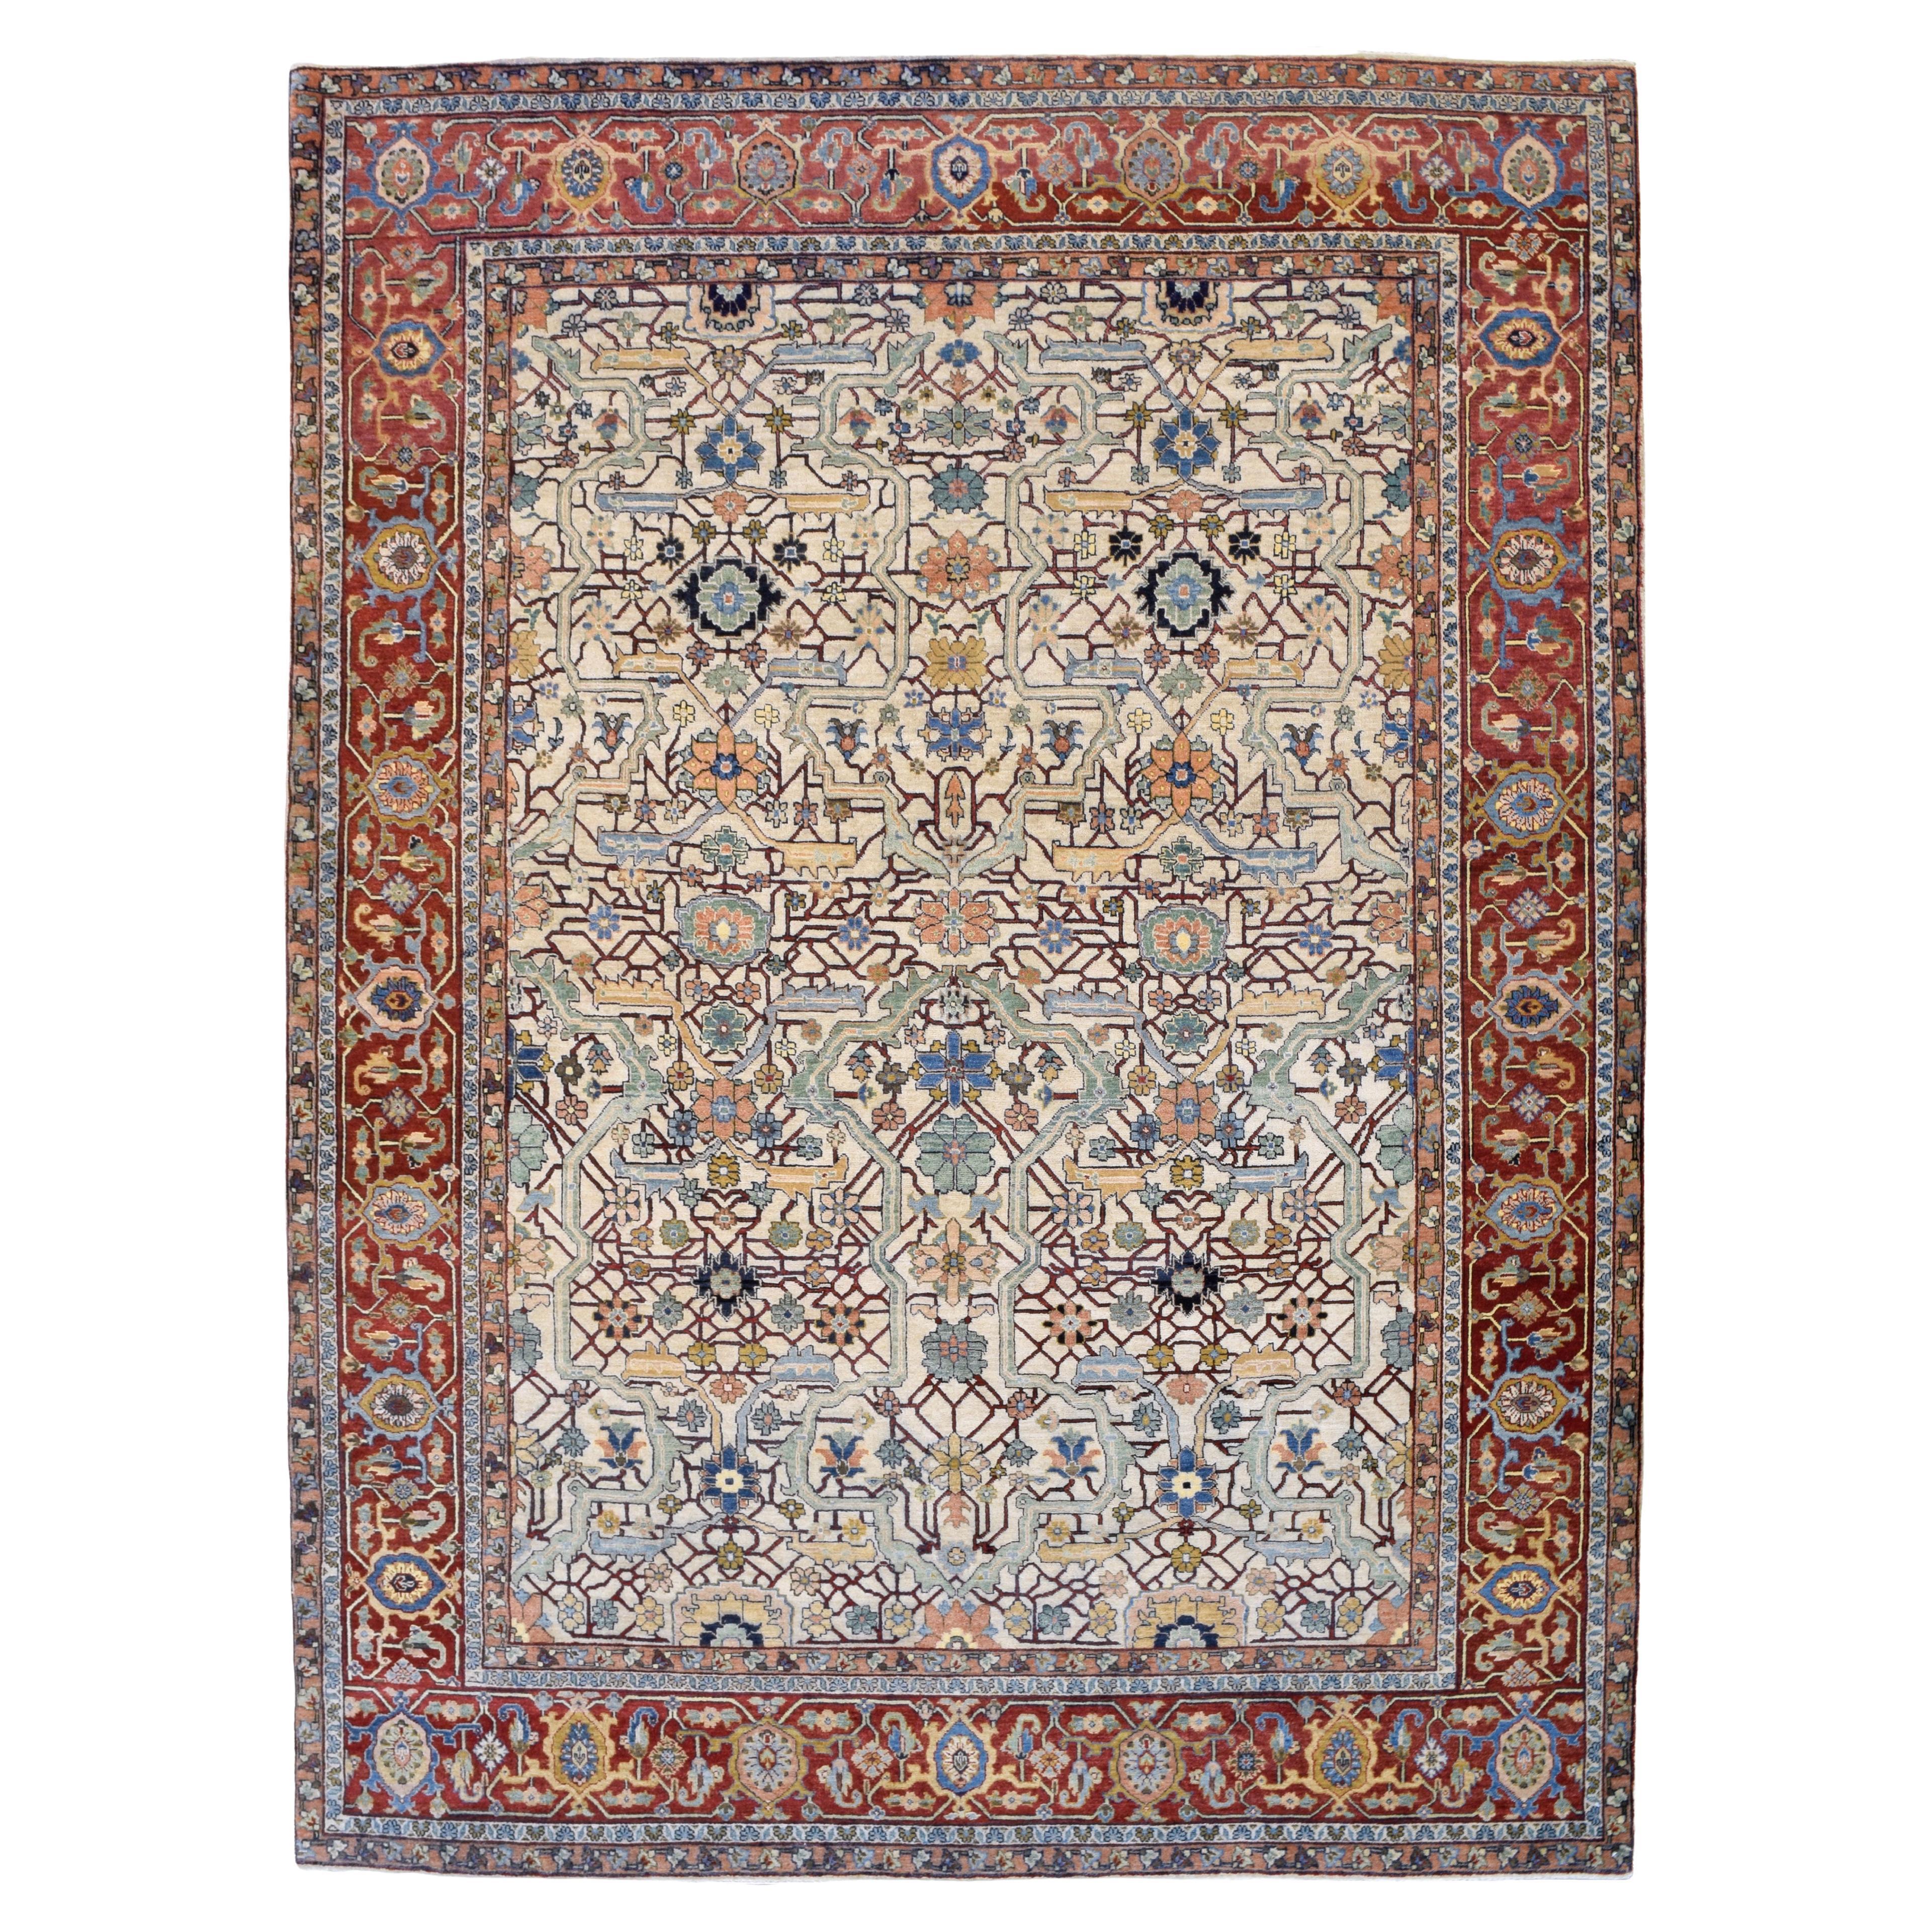 Hand-Knotted Transitional Heriz Serapi Wool Carpet, Red, Indigo, Cream, 8' x 10'